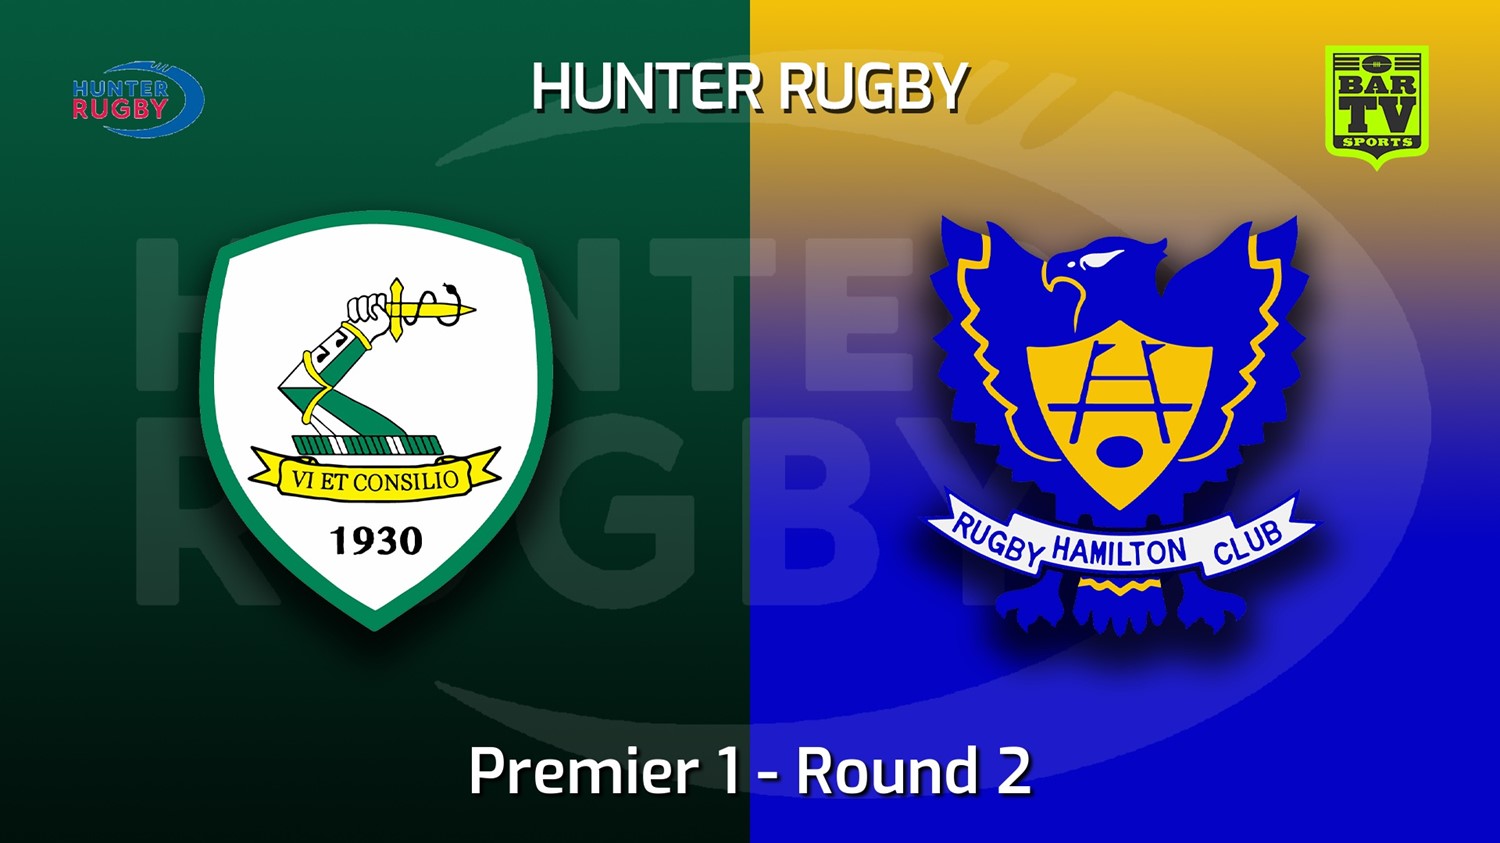 220430-Hunter Rugby Round 2 - Premier 1 - Merewether Carlton v Hamilton Hawks Slate Image